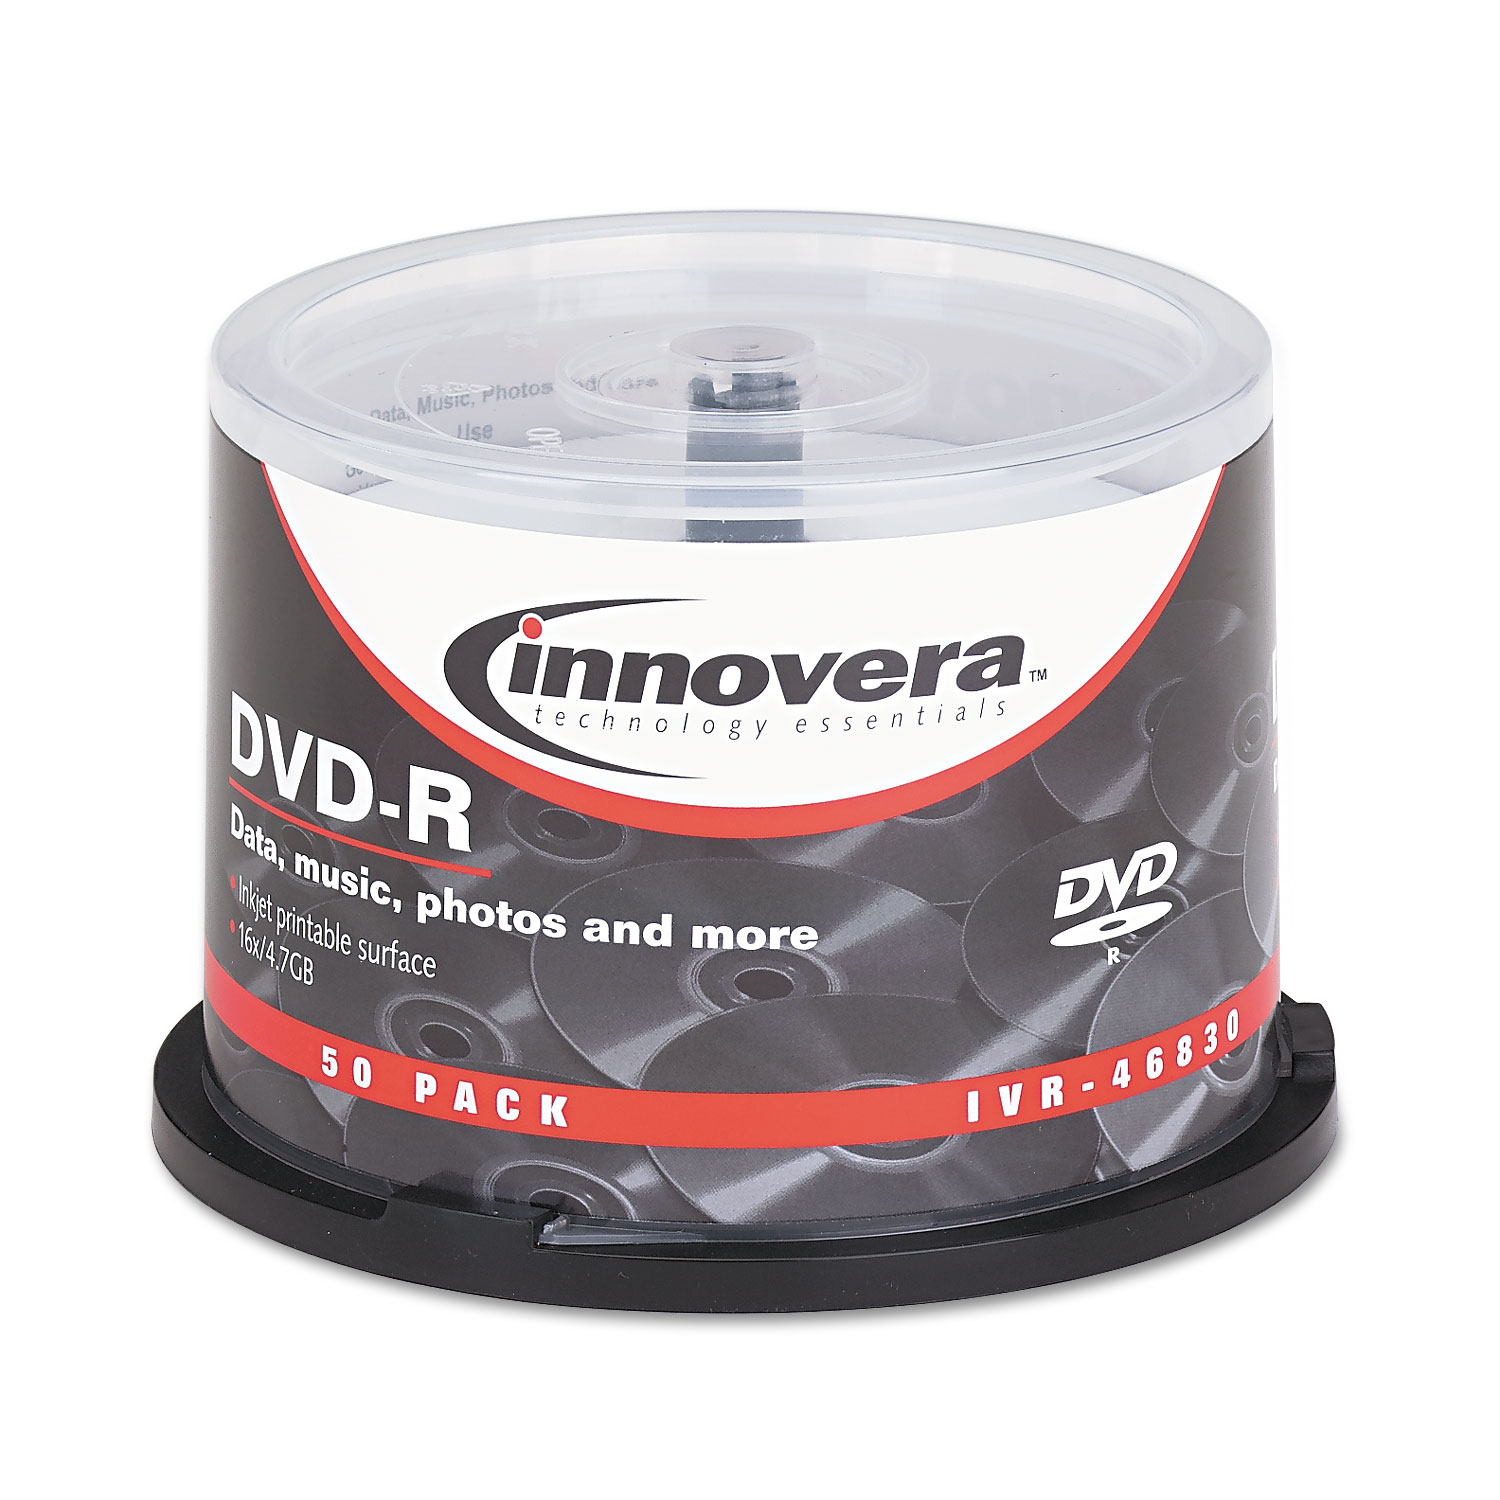  Innovera IVR46830 DVD-R Discs, Hub Printable, 4.7GB, 16x, Spindle, Matte White, 50/Pack (IVR46830) 